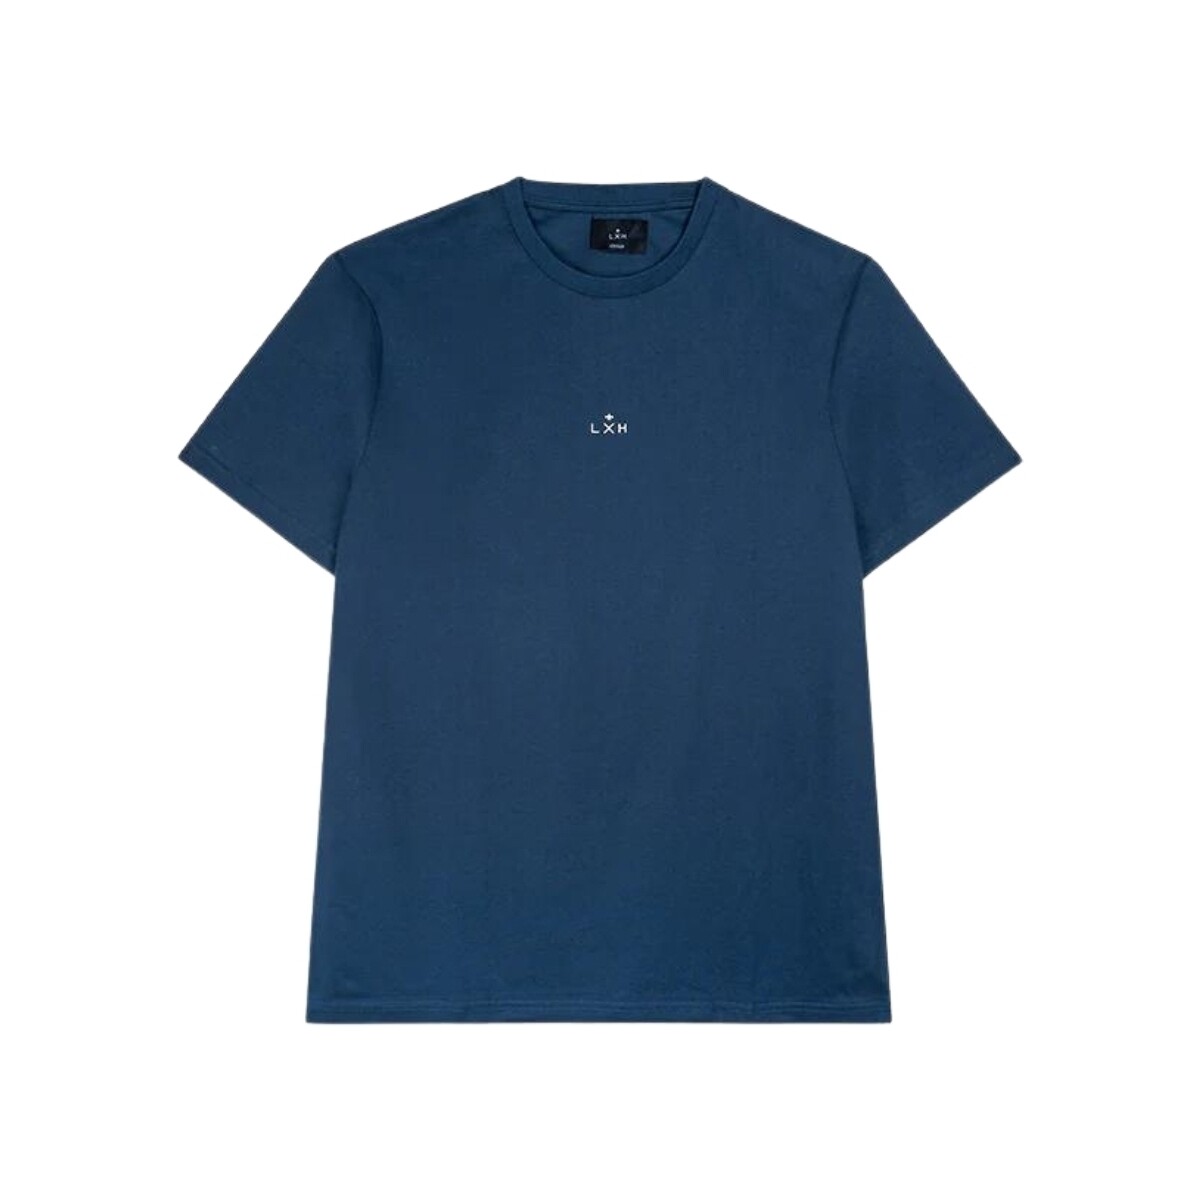 Vêtements Homme T-shirts & Polos LXH T shirt homme  Ref 62328 Bleu marine et blanc Bleu